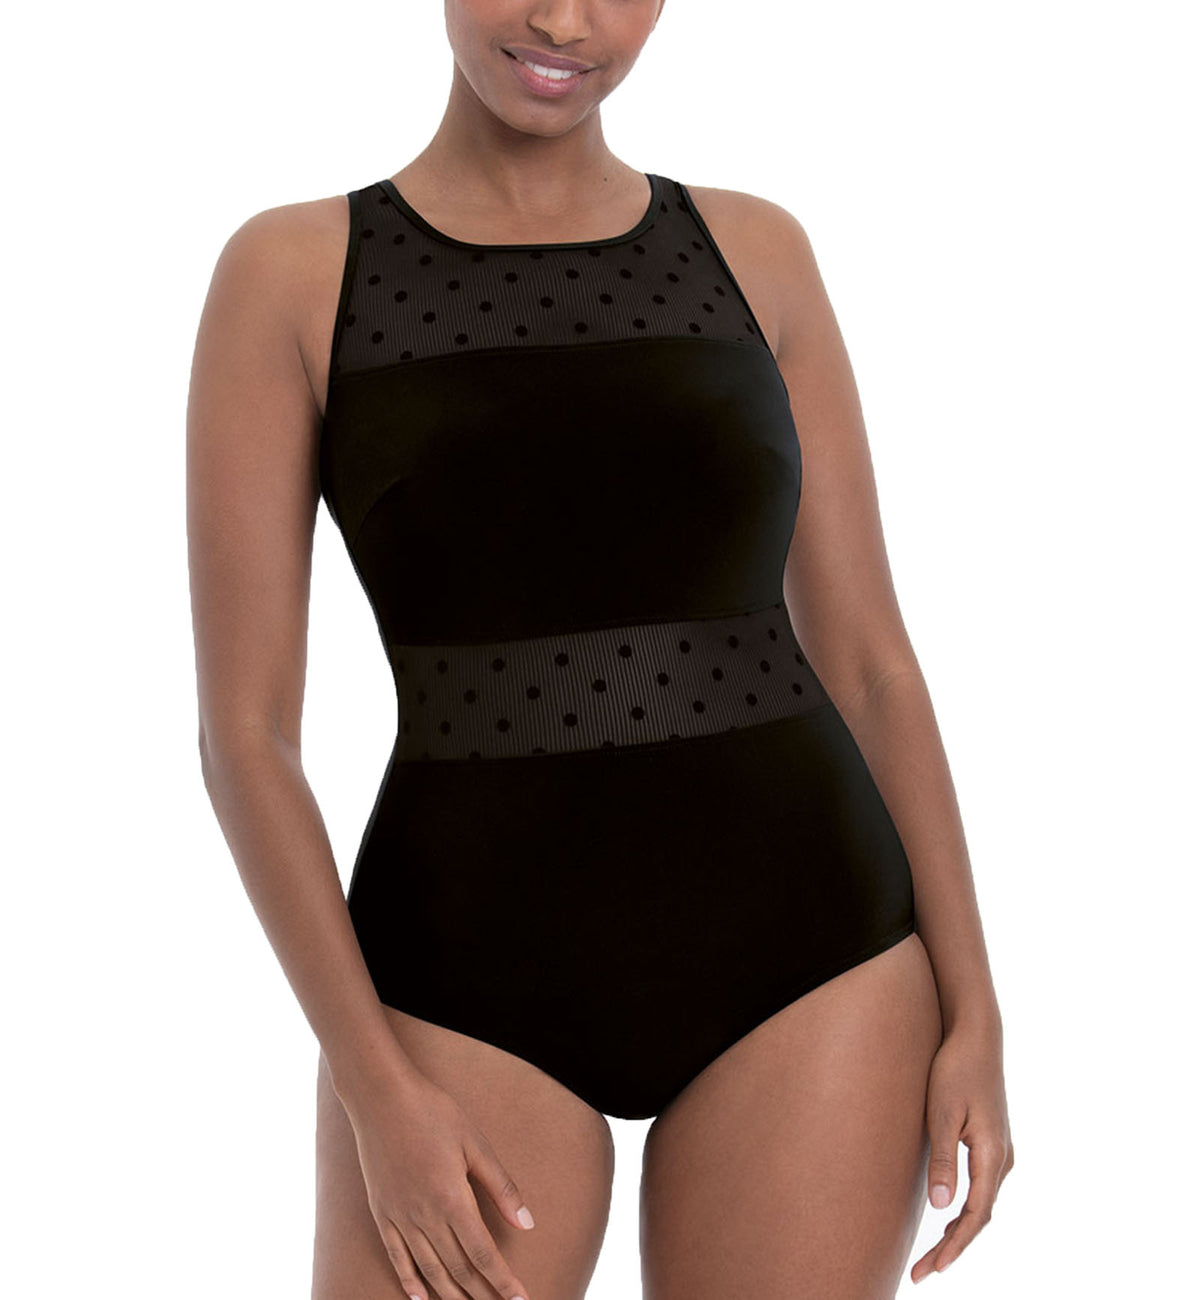 Anita Care Summer Dot Vera High Neck One Piece Swimsuit (6224),32C,Black - Black,32C